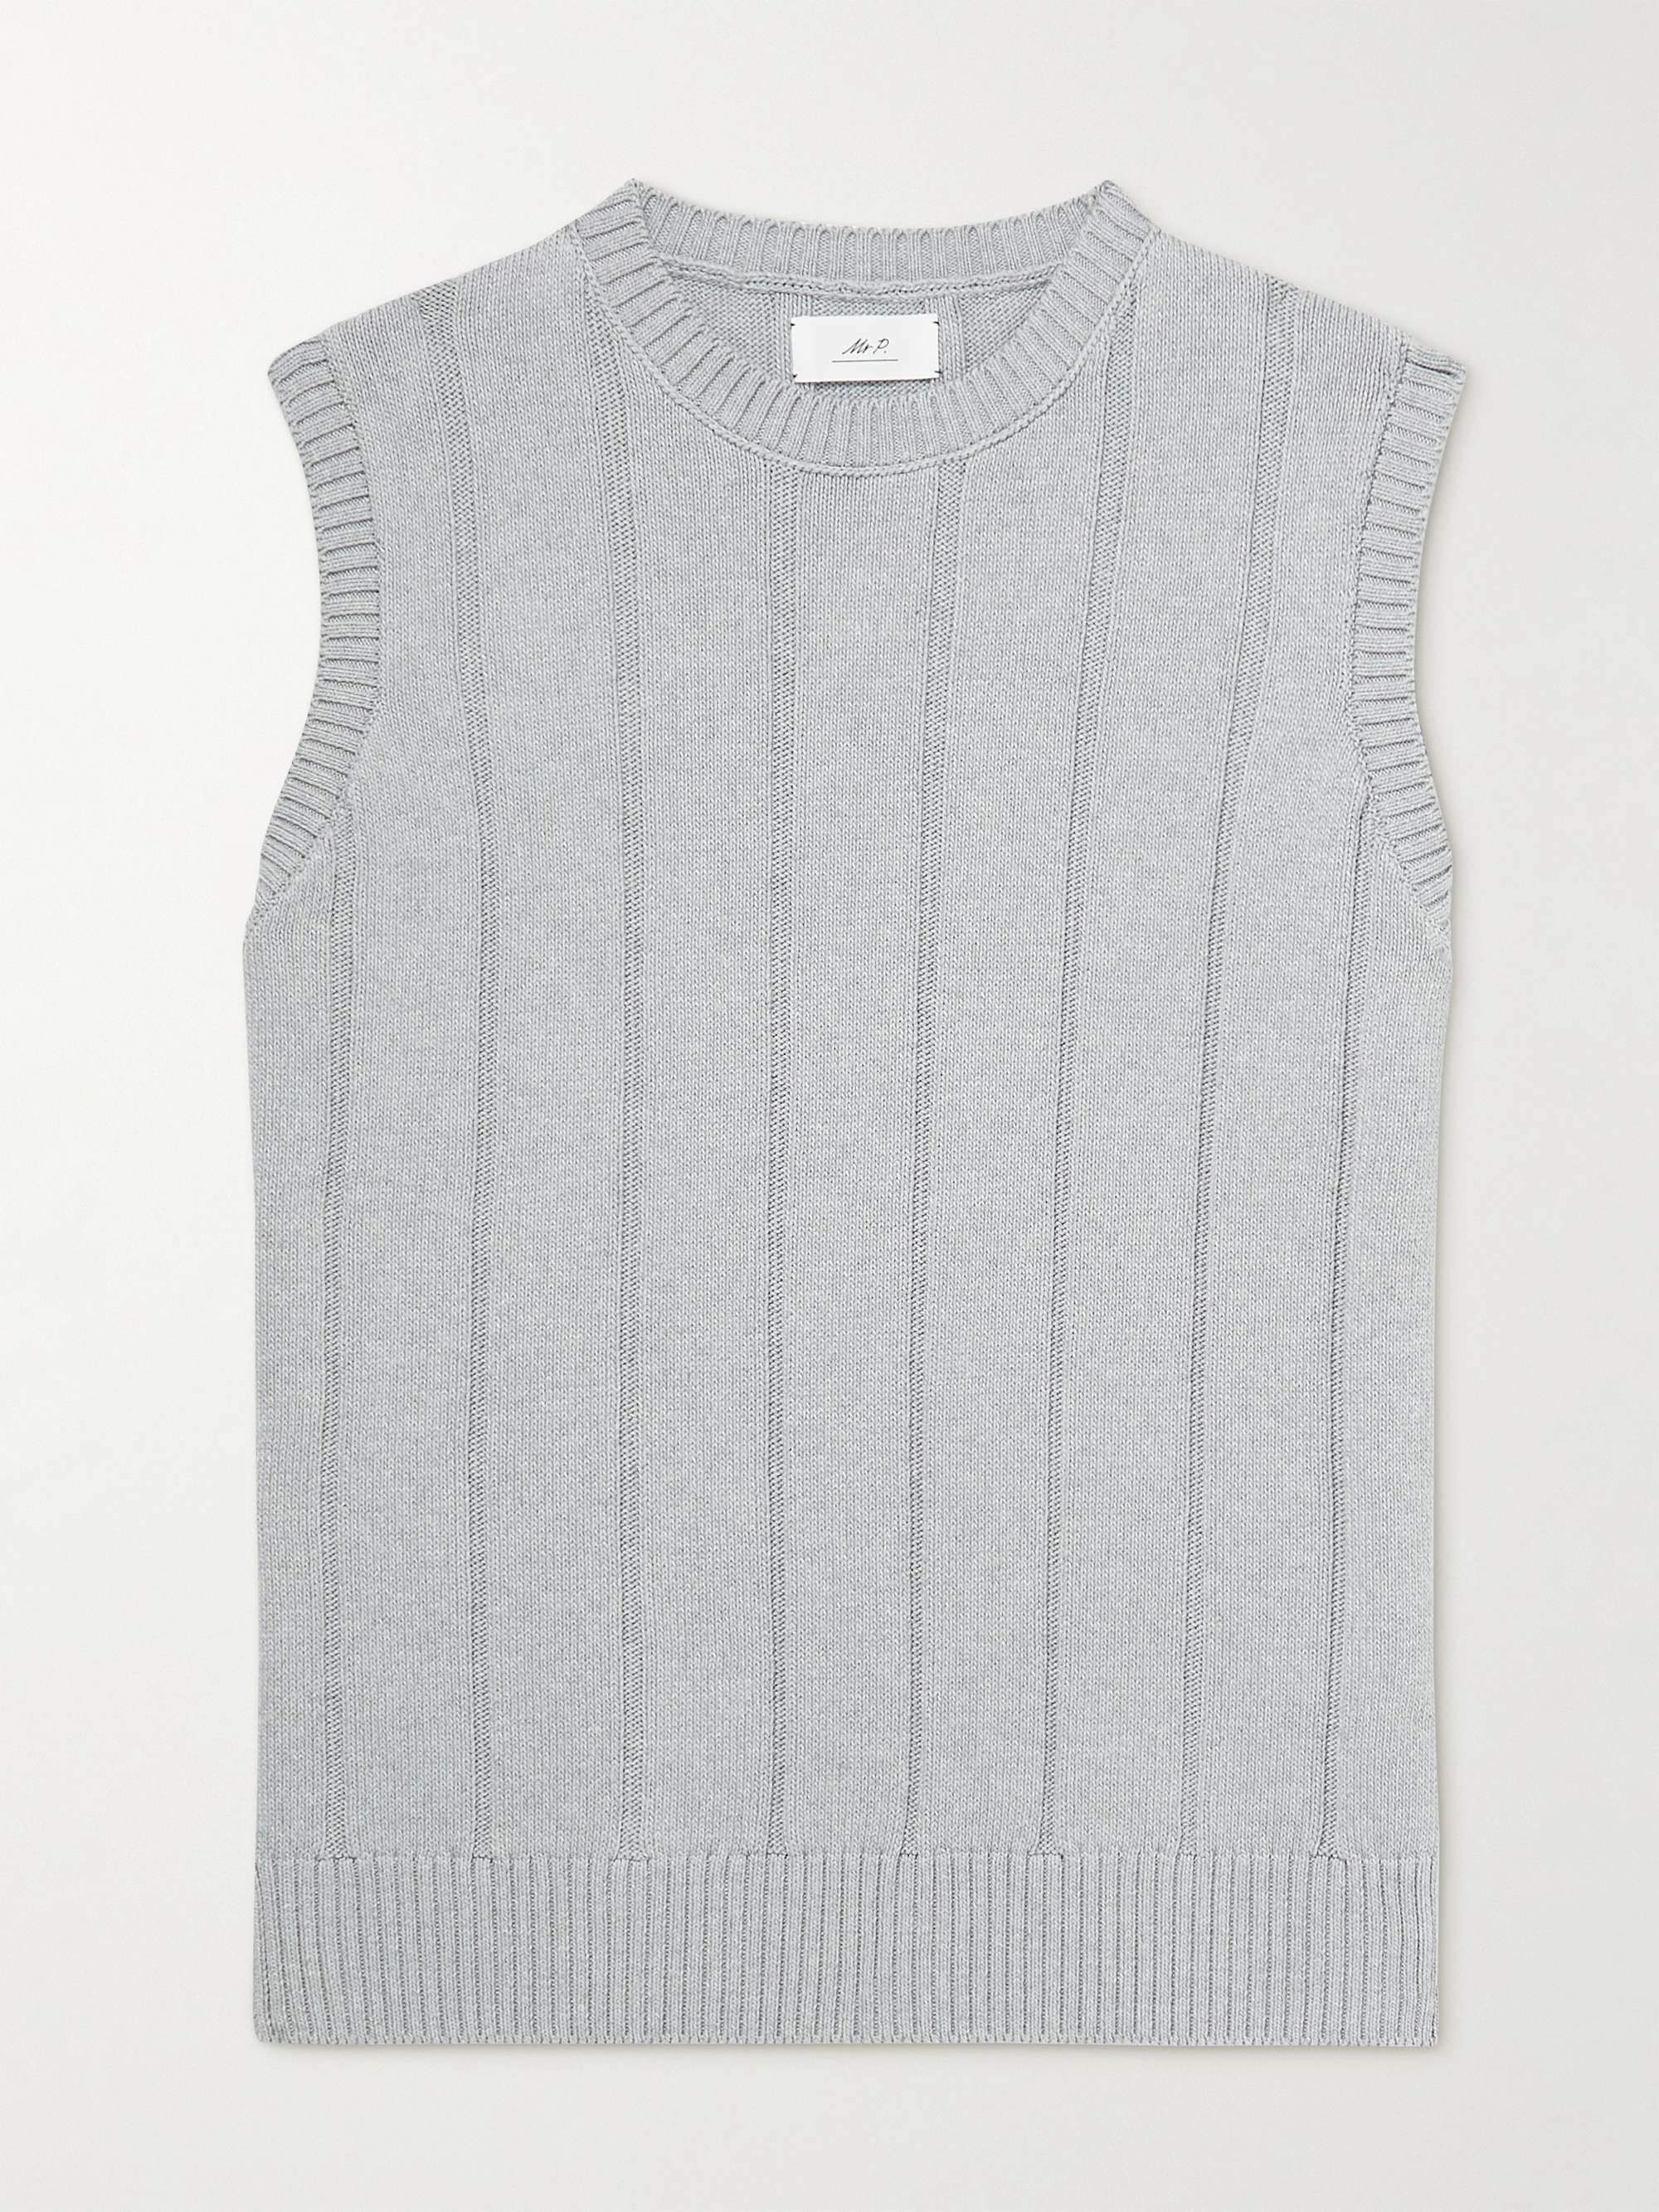 MR P. Ribbed Organic Cotton Vest for Men | MR PORTER